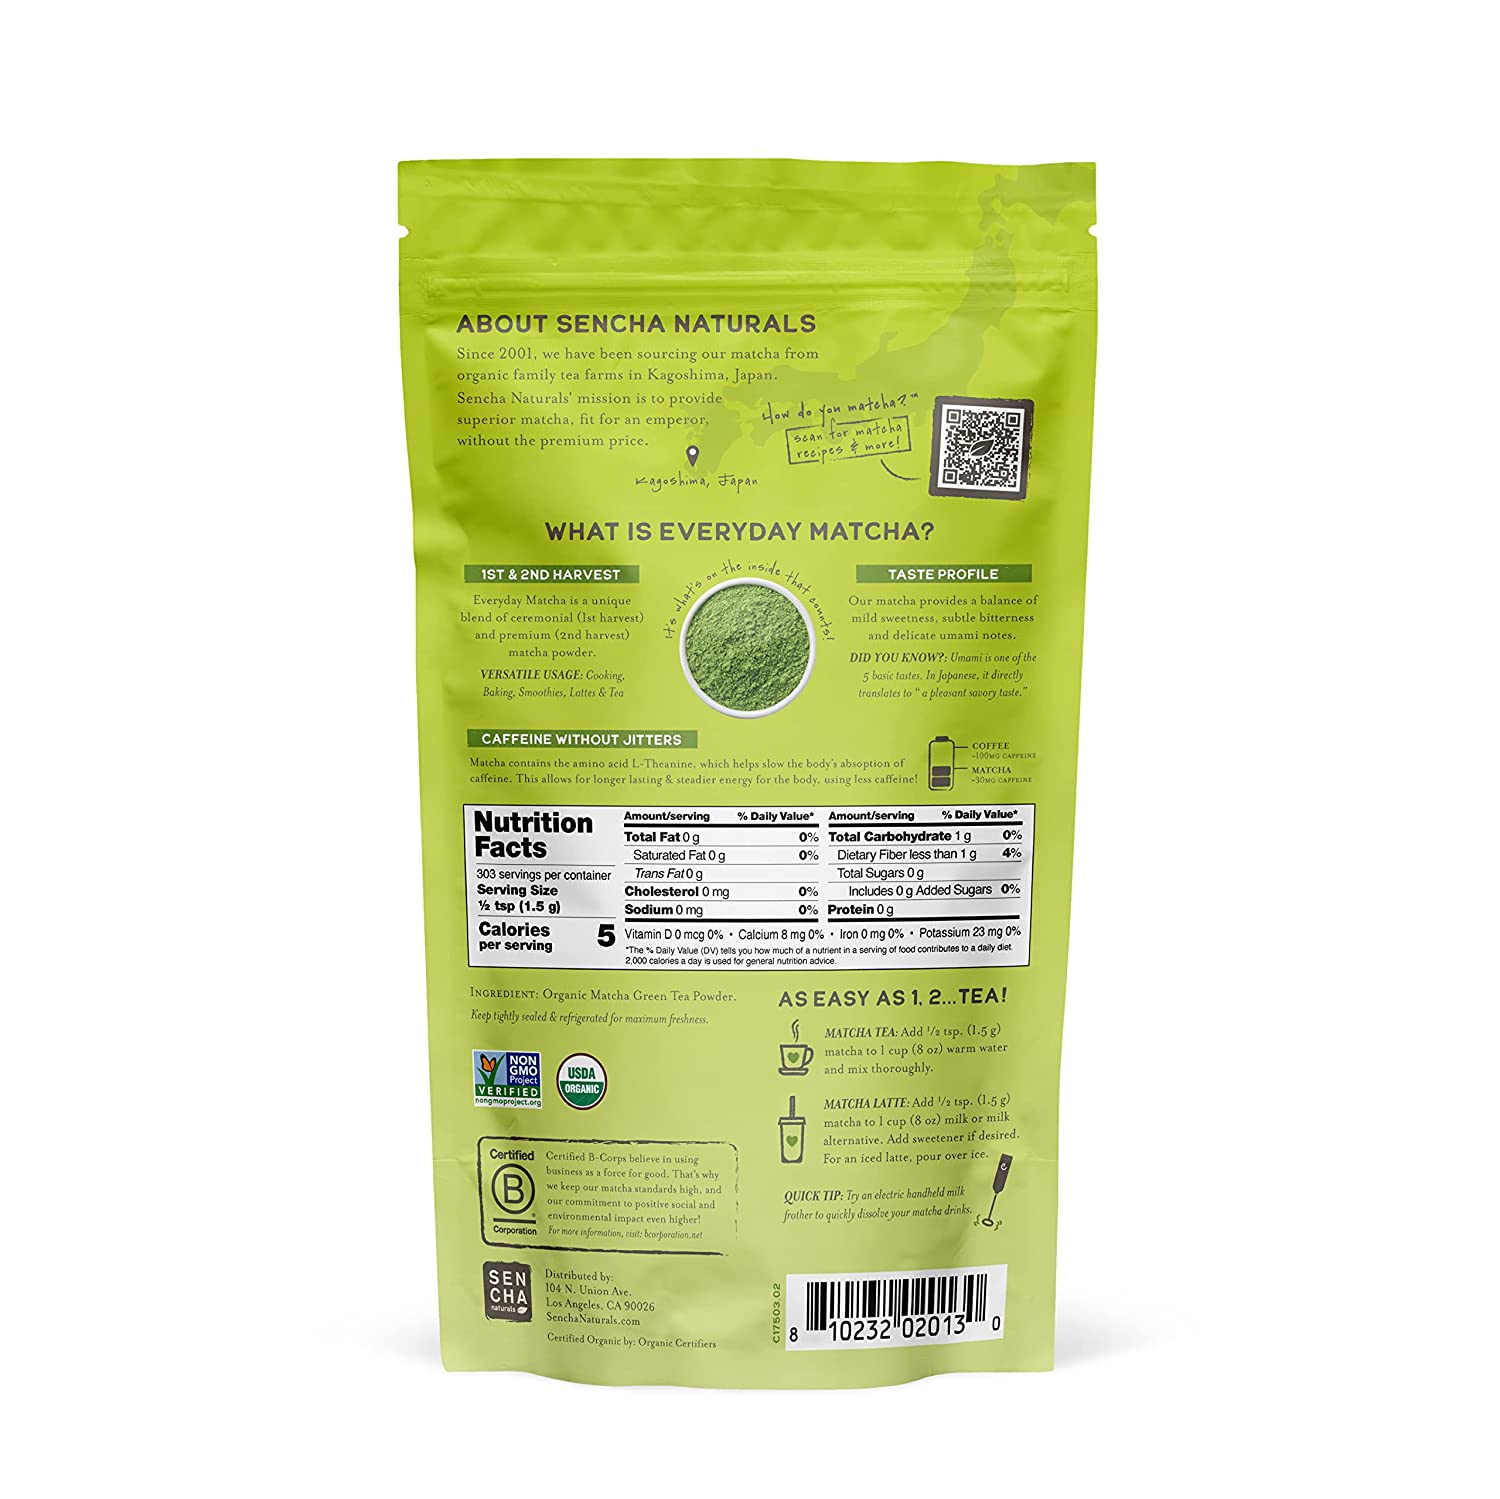 Matcha Powder - Everyday Organic | 1 lb Bag